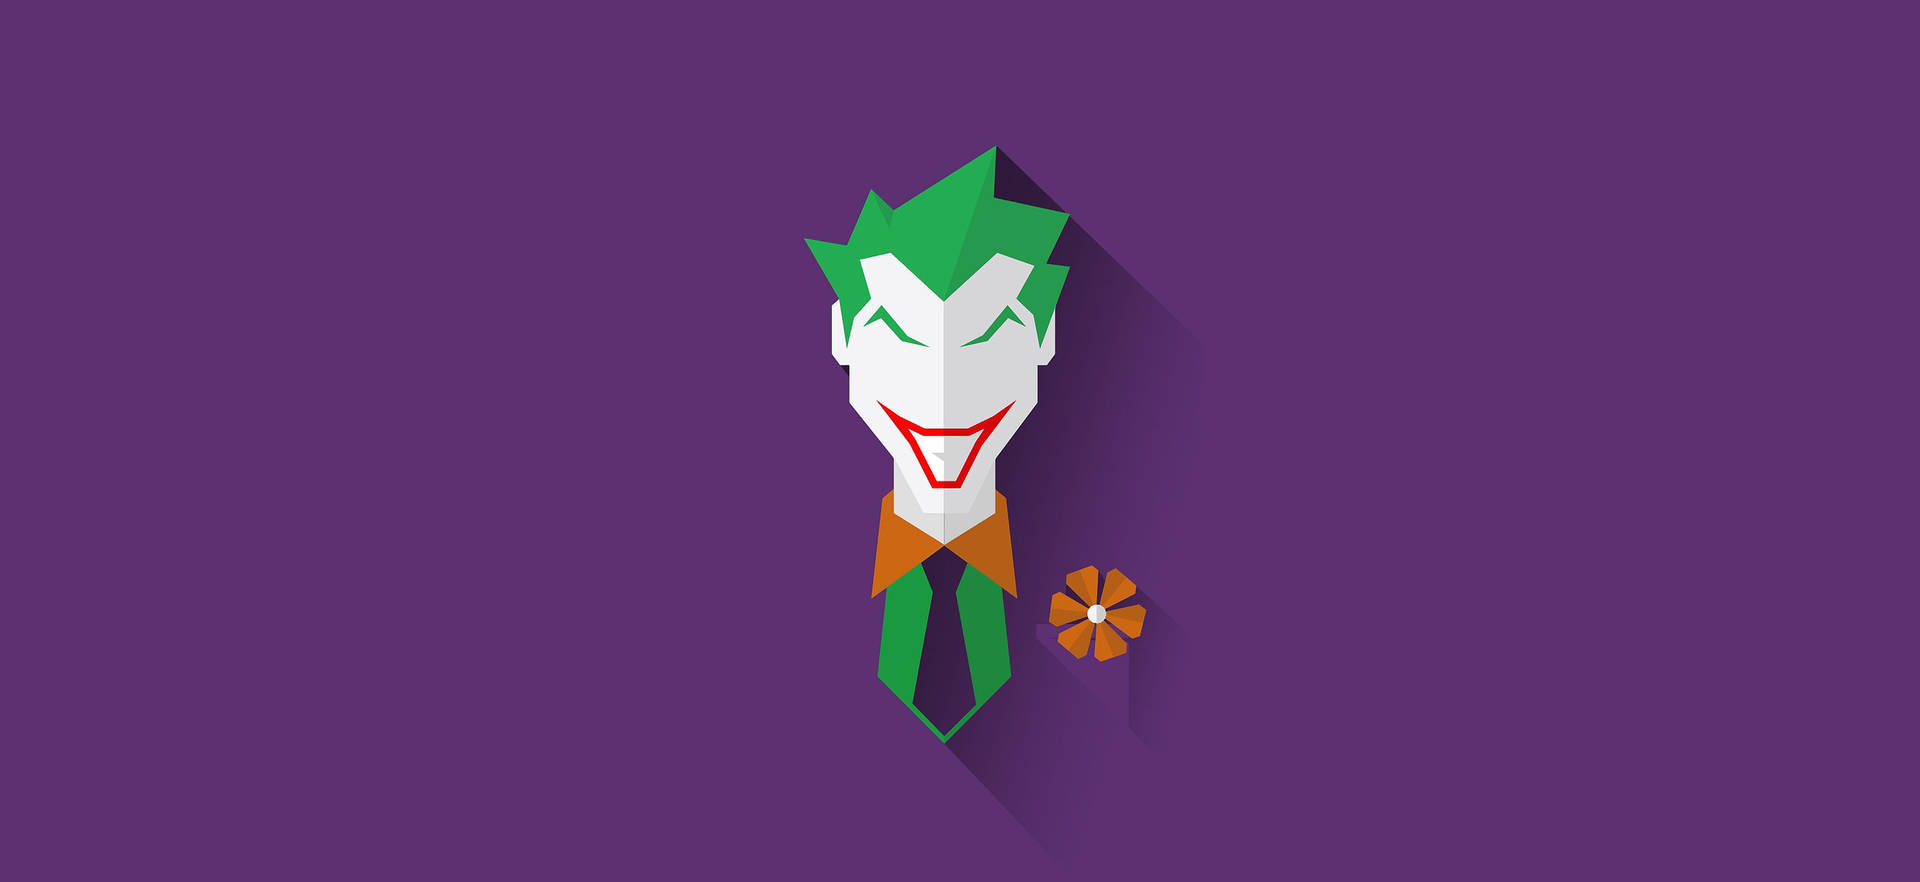 Joker 2800X1286 Wallpaper and Background Image